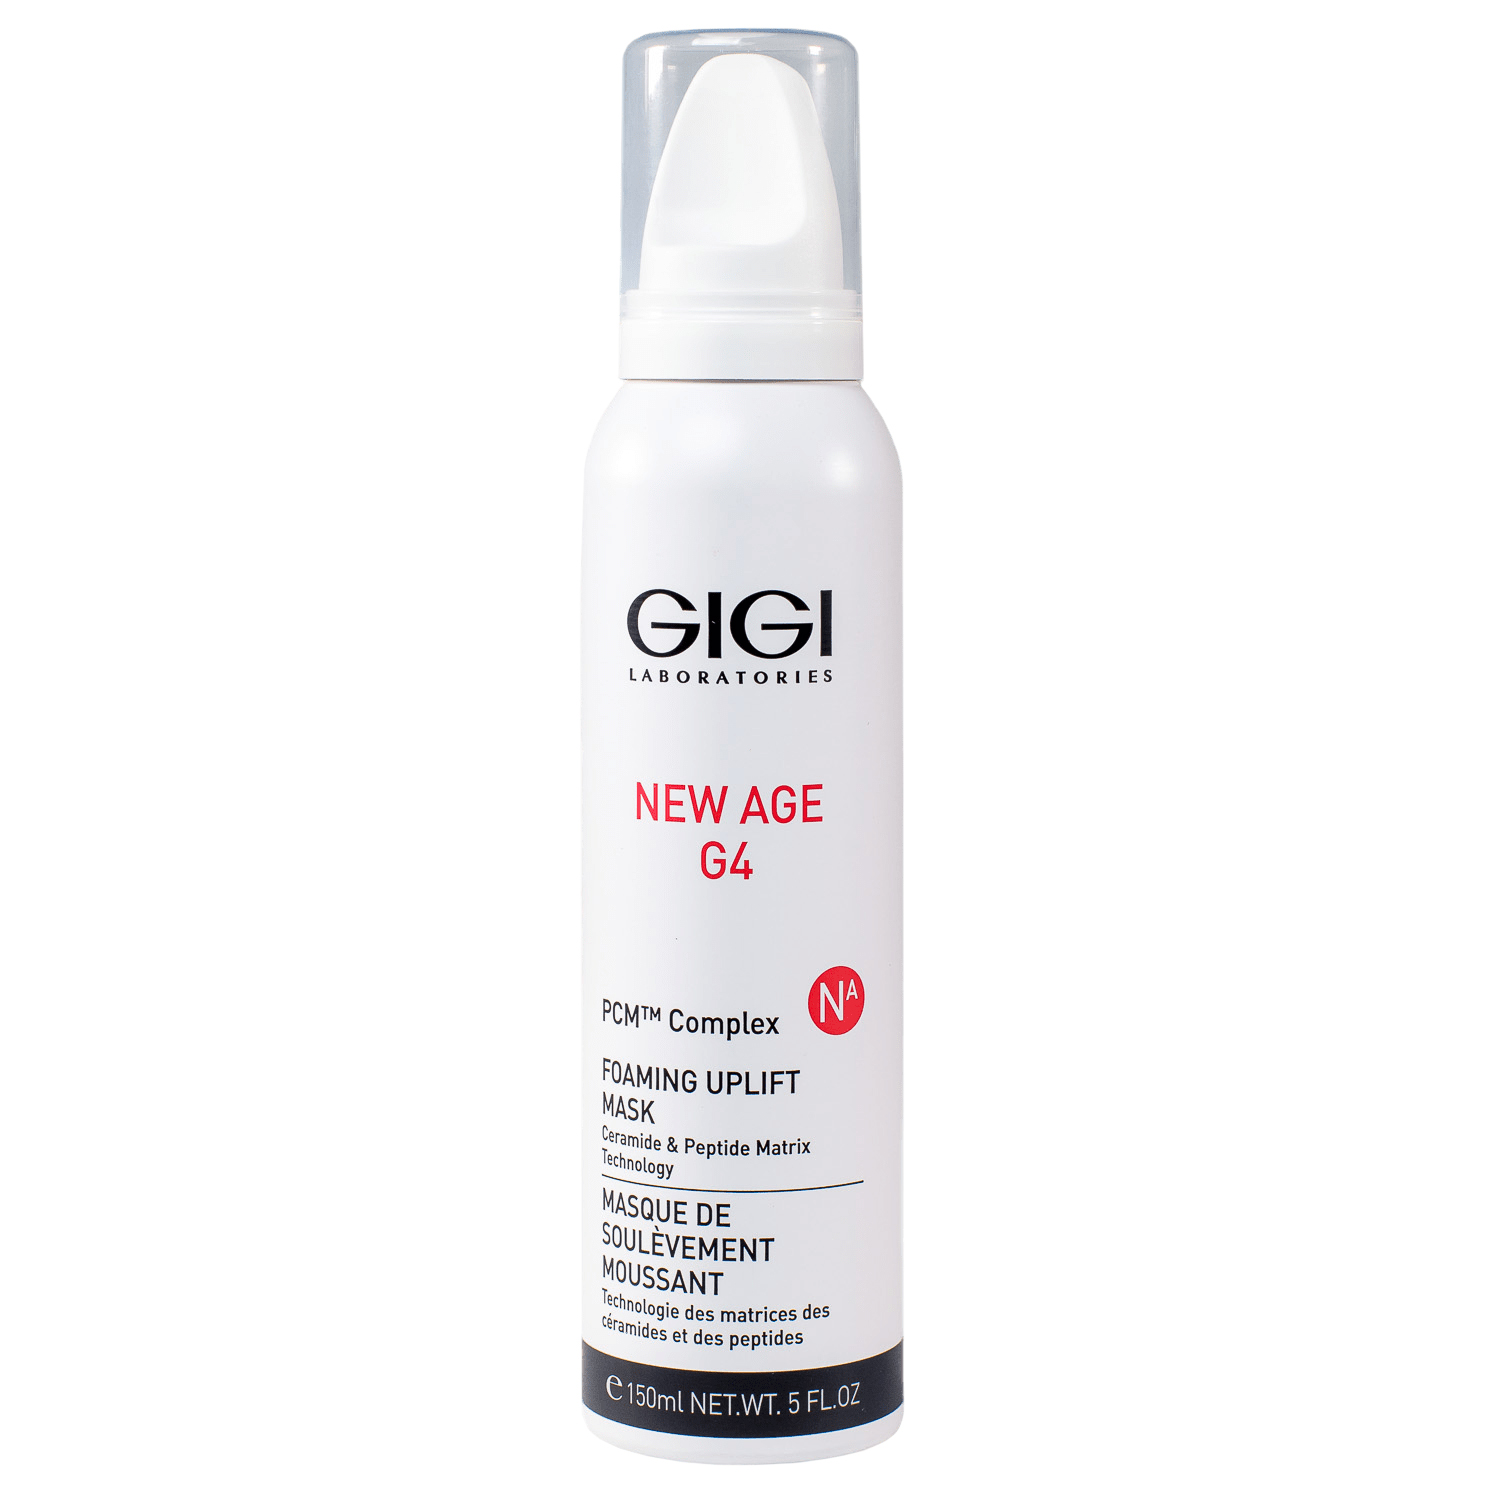 Gigi new age g4. Gigi маска мусс. Gigi набор New age g4. Gigi New age g4 20250 набор Cell Regeneration Trail. Мусс маска Probiotic.